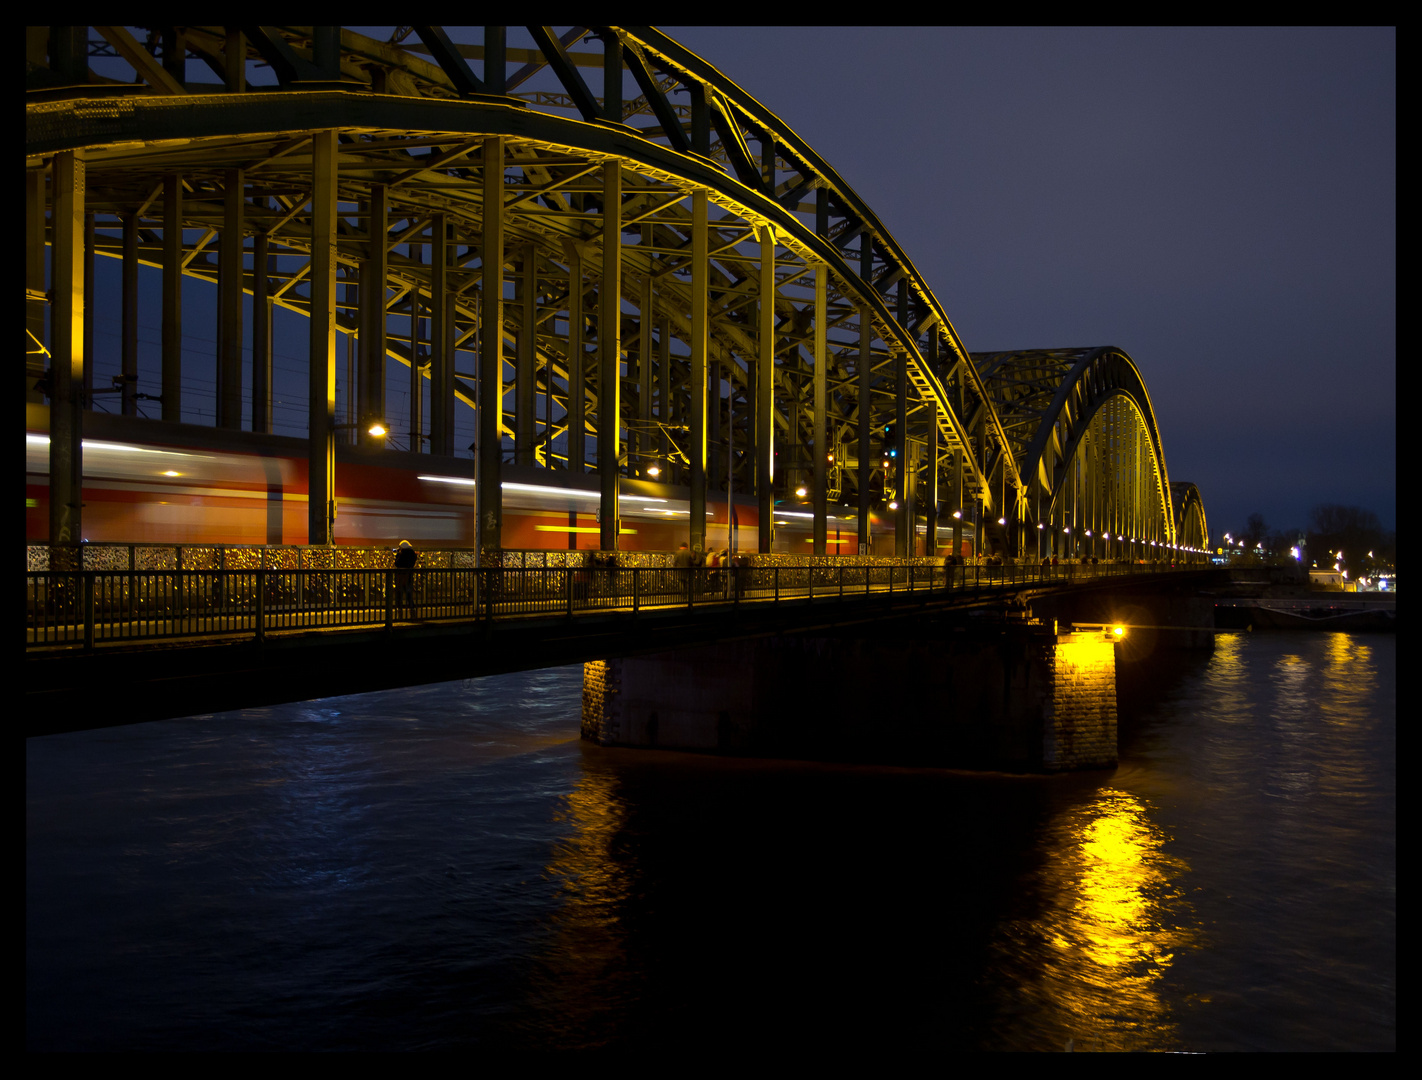 Hohenzollernbrücke